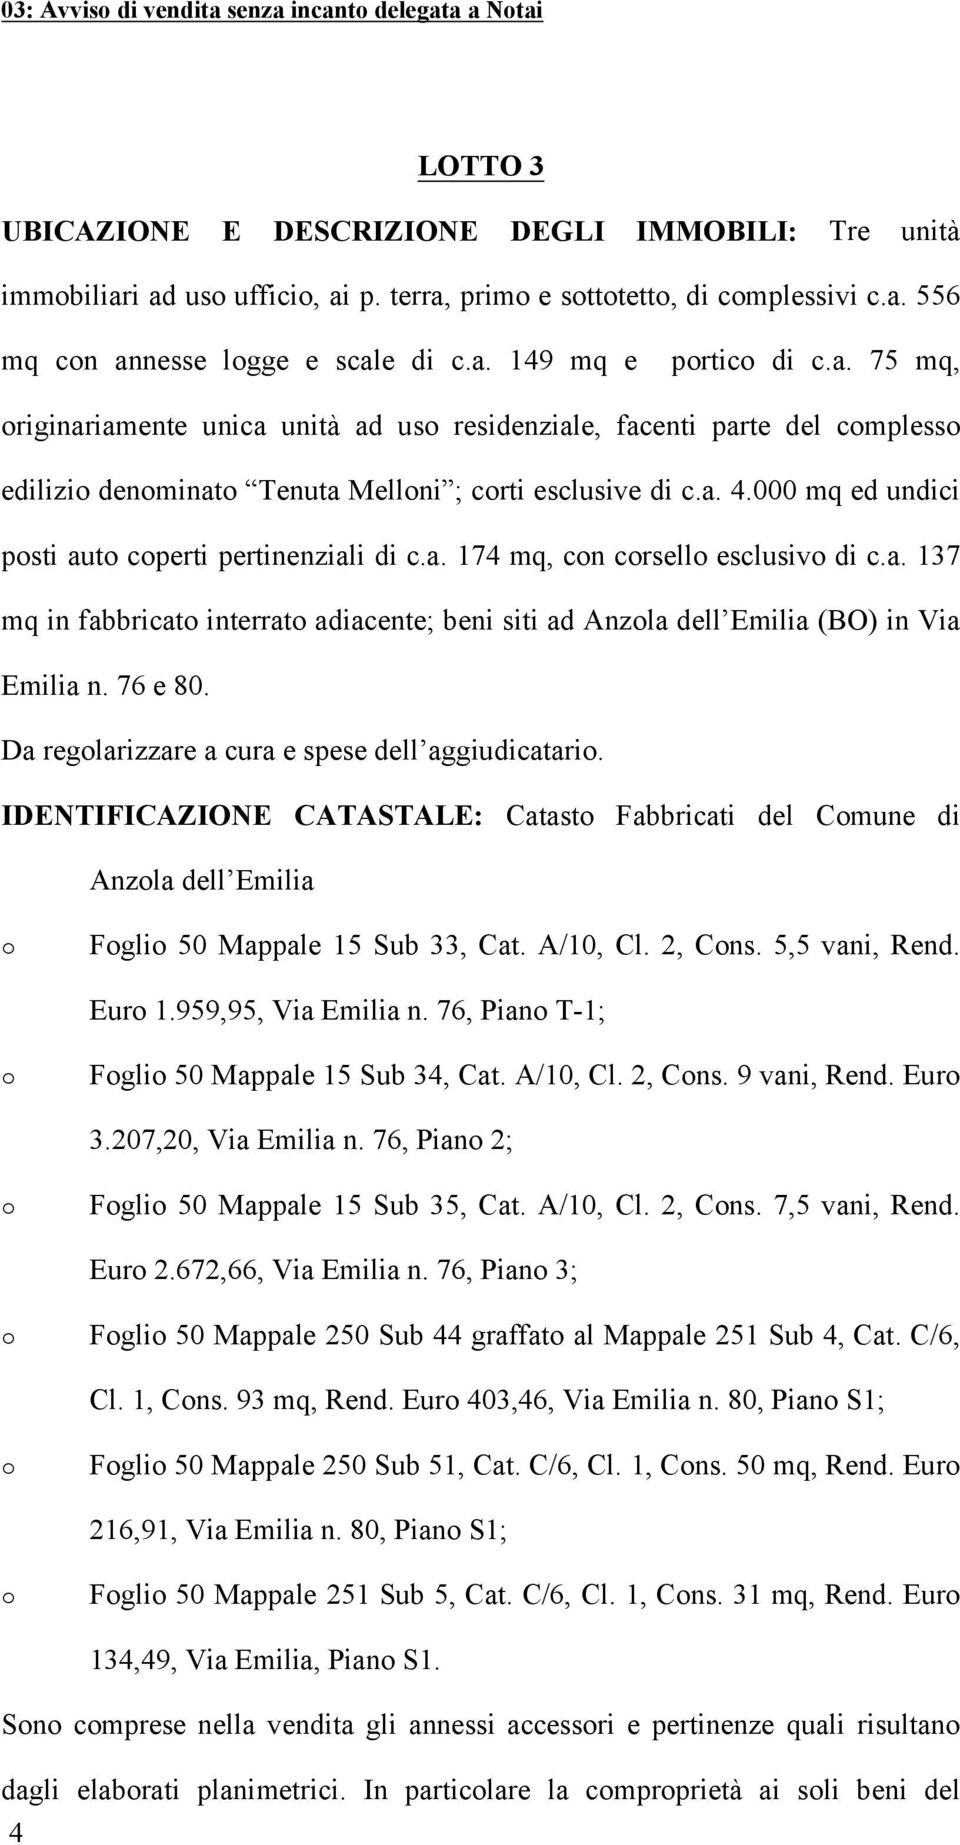 000 mq ed undici psti aut cperti pertinenziali di c.a. 174 mq, cn crsell esclusiv di c.a. 137 mq in fabbricat interrat adiacente; beni siti ad Anzla dell Emilia (BO) in Via Emilia n. 76 e 80.